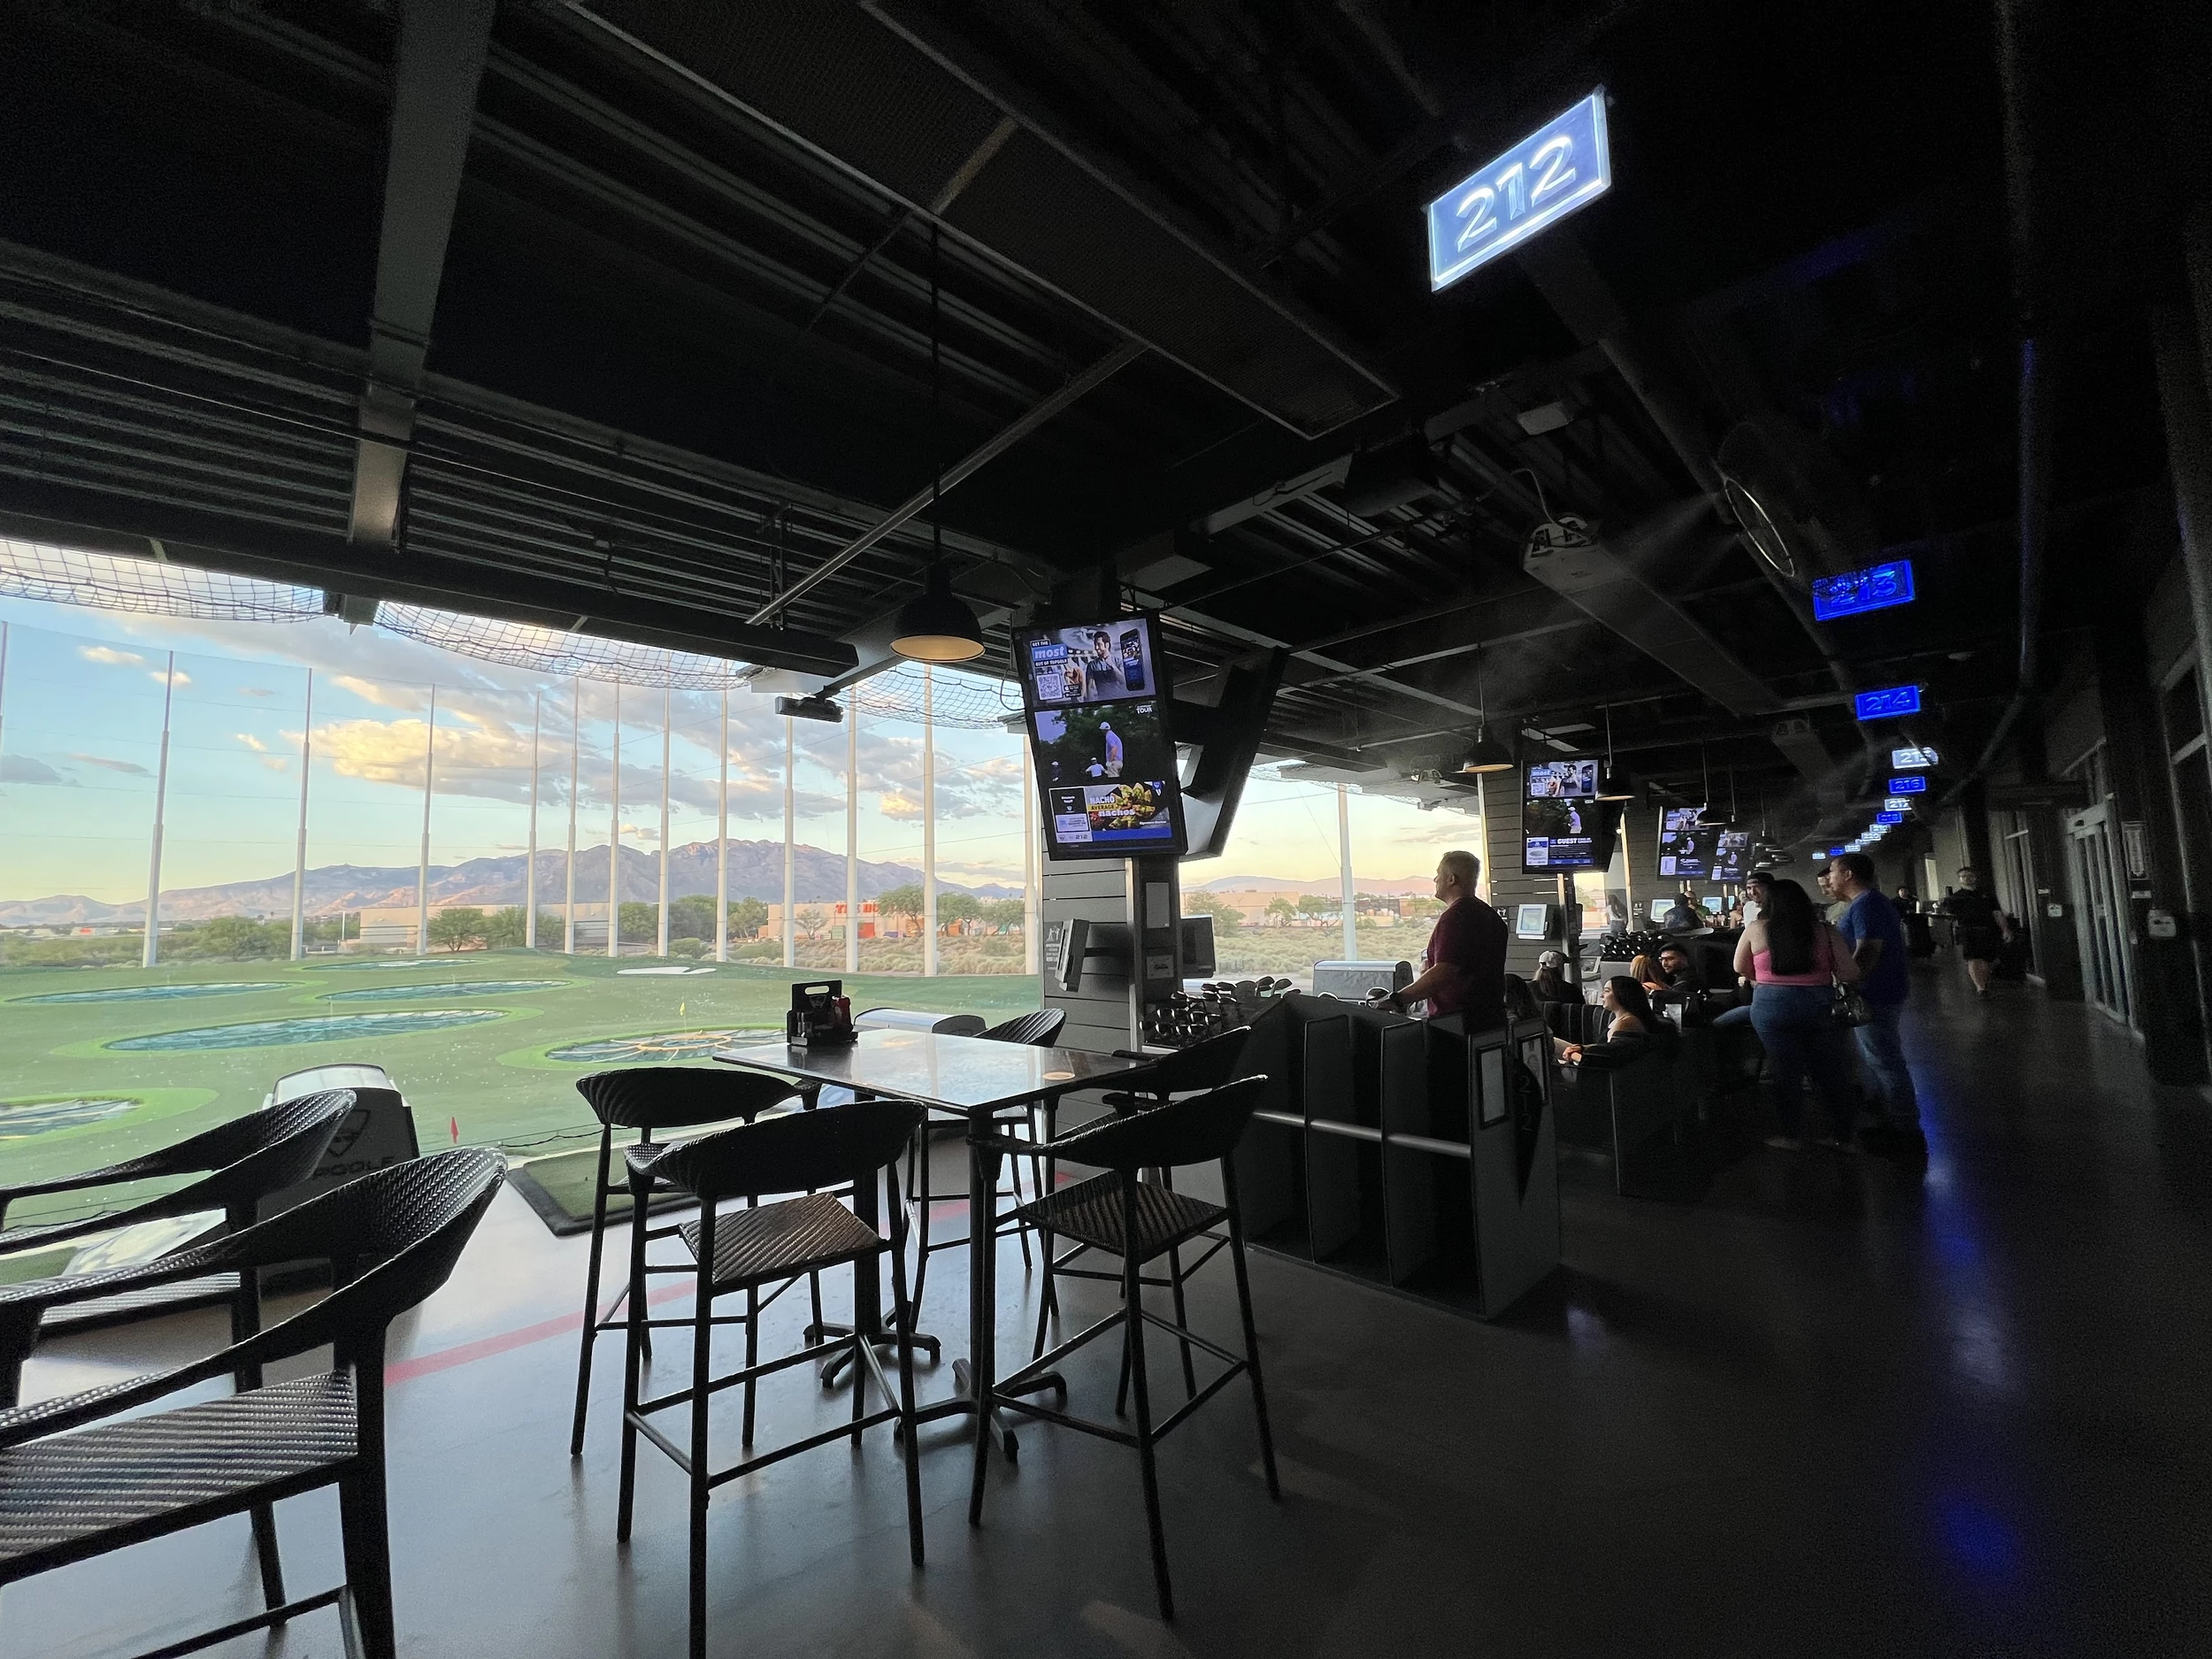 Topgolf teases interest in Boise, ID area golf entertainment venue